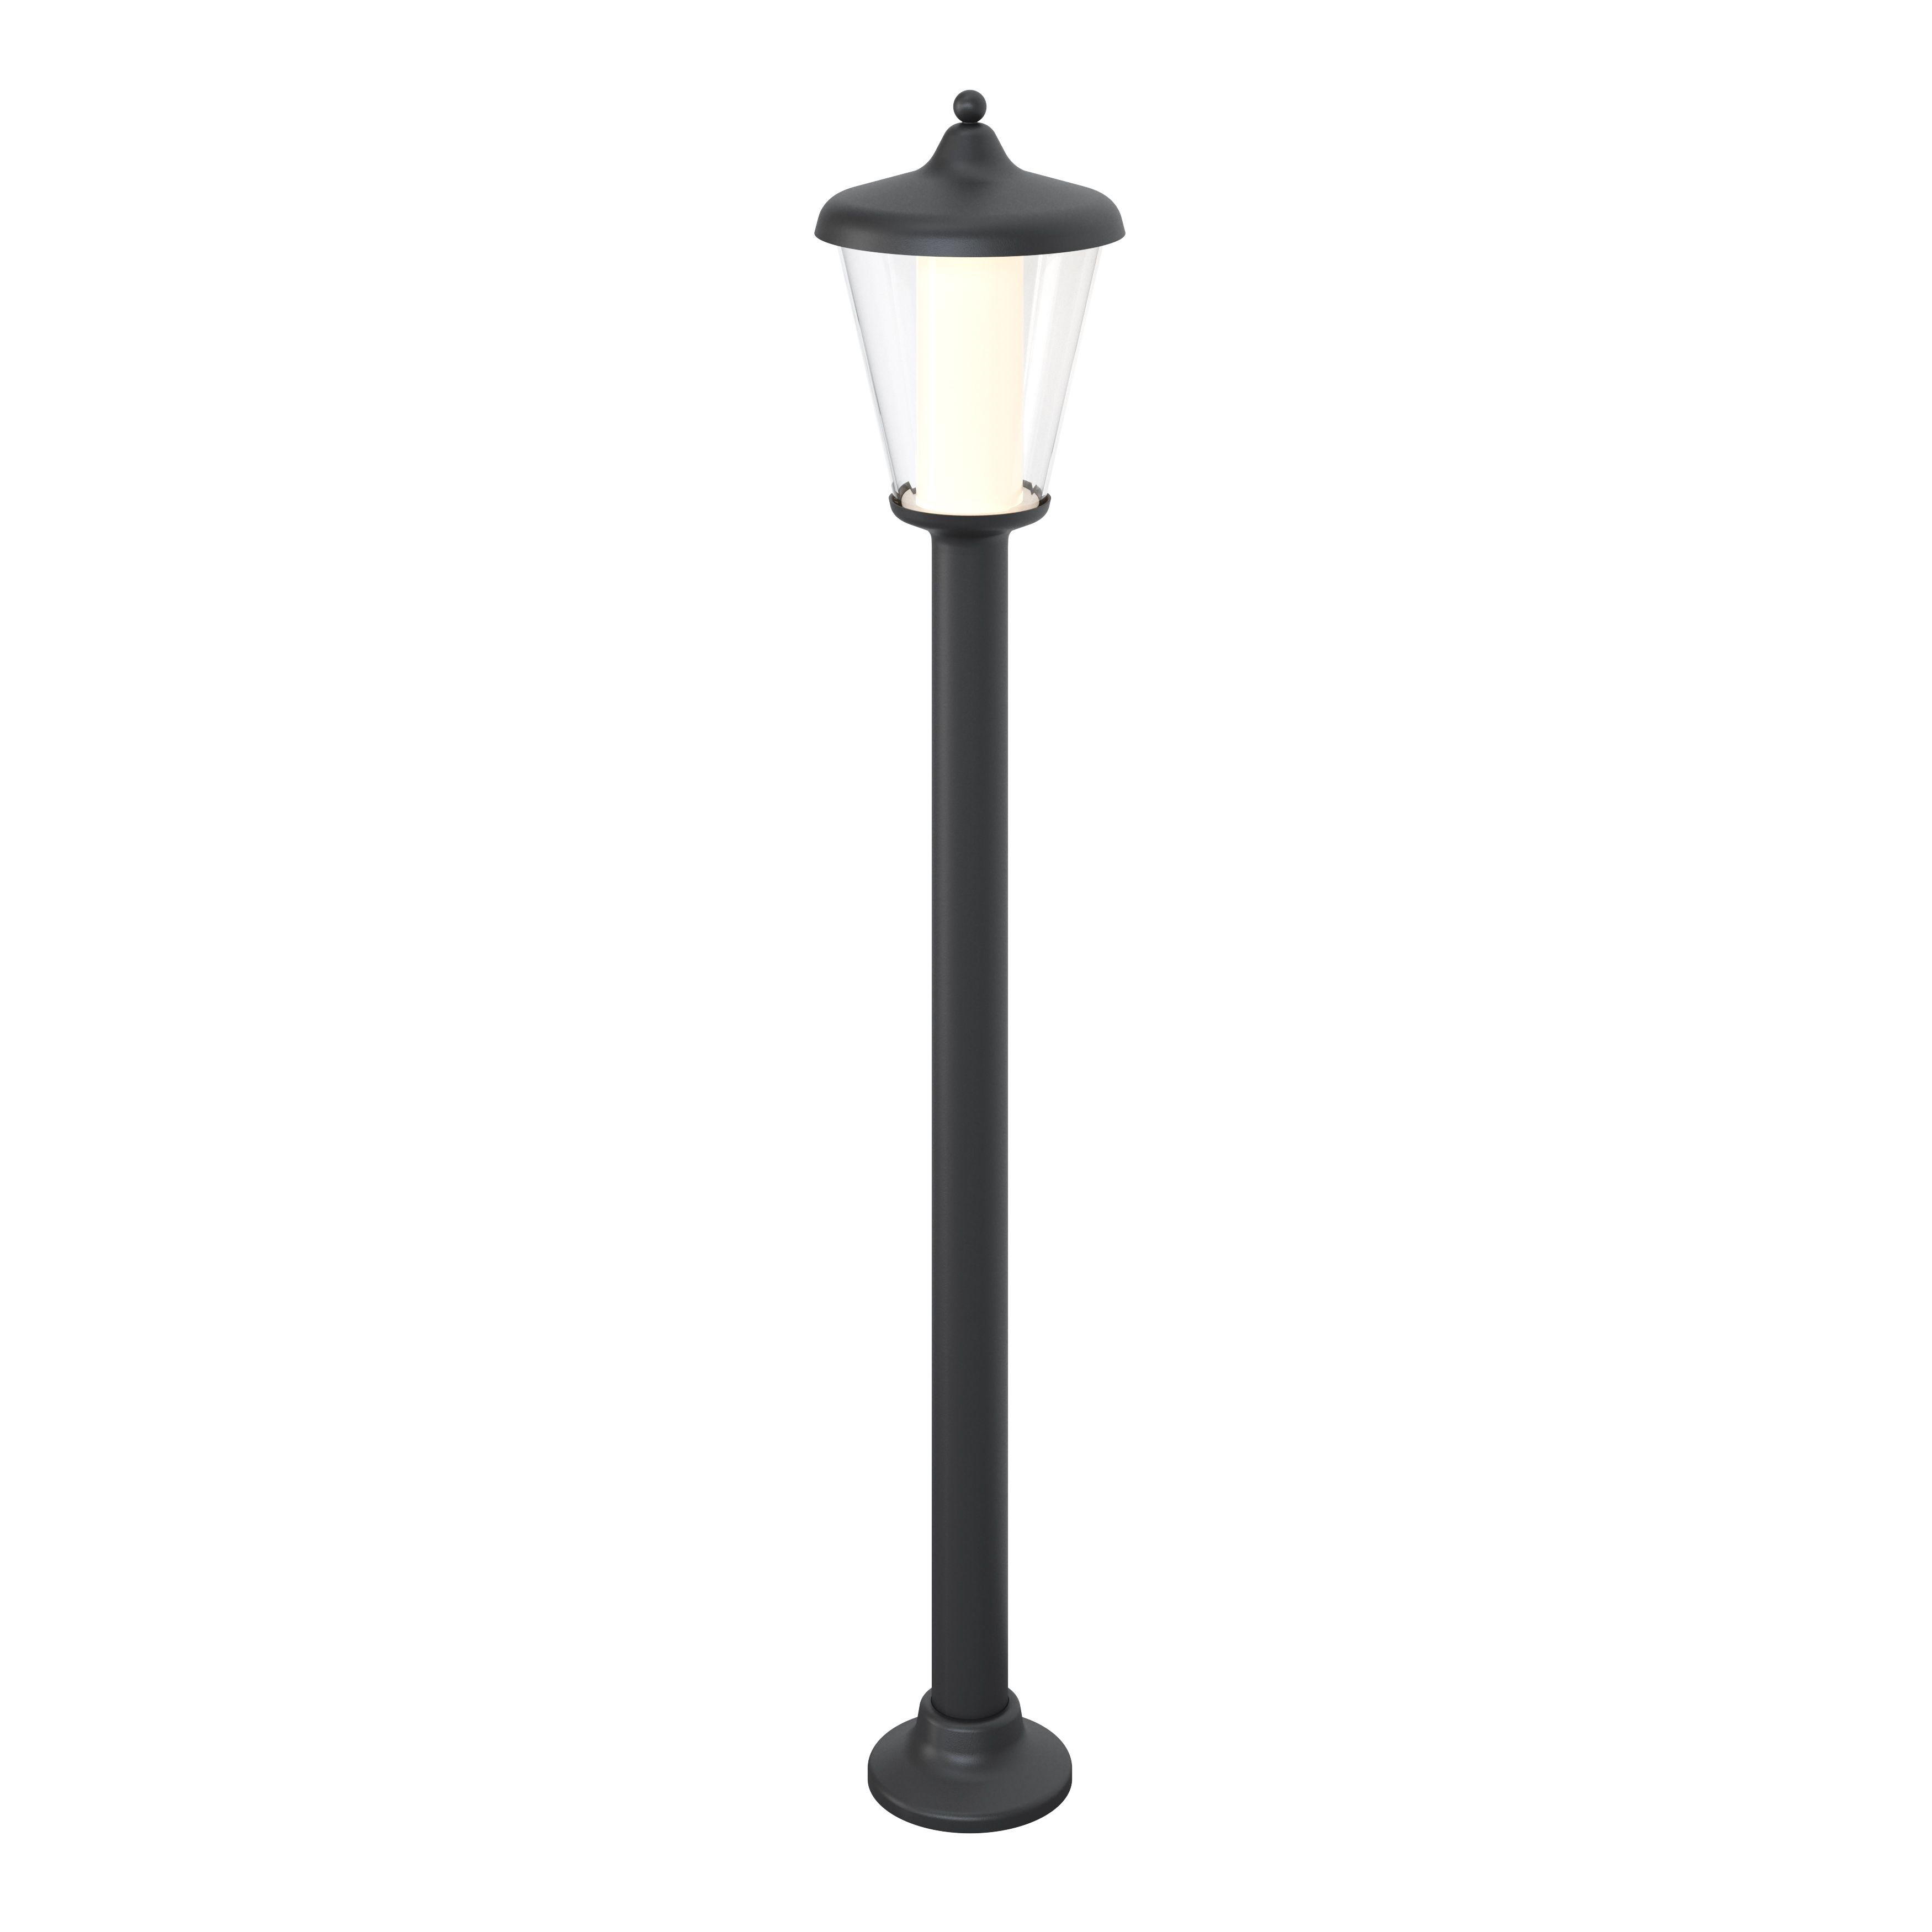 GoodHome Haro Lantern Dark grey Mains-powered 1 lamp Integrated LED Outdoor Post light (H)1100mm